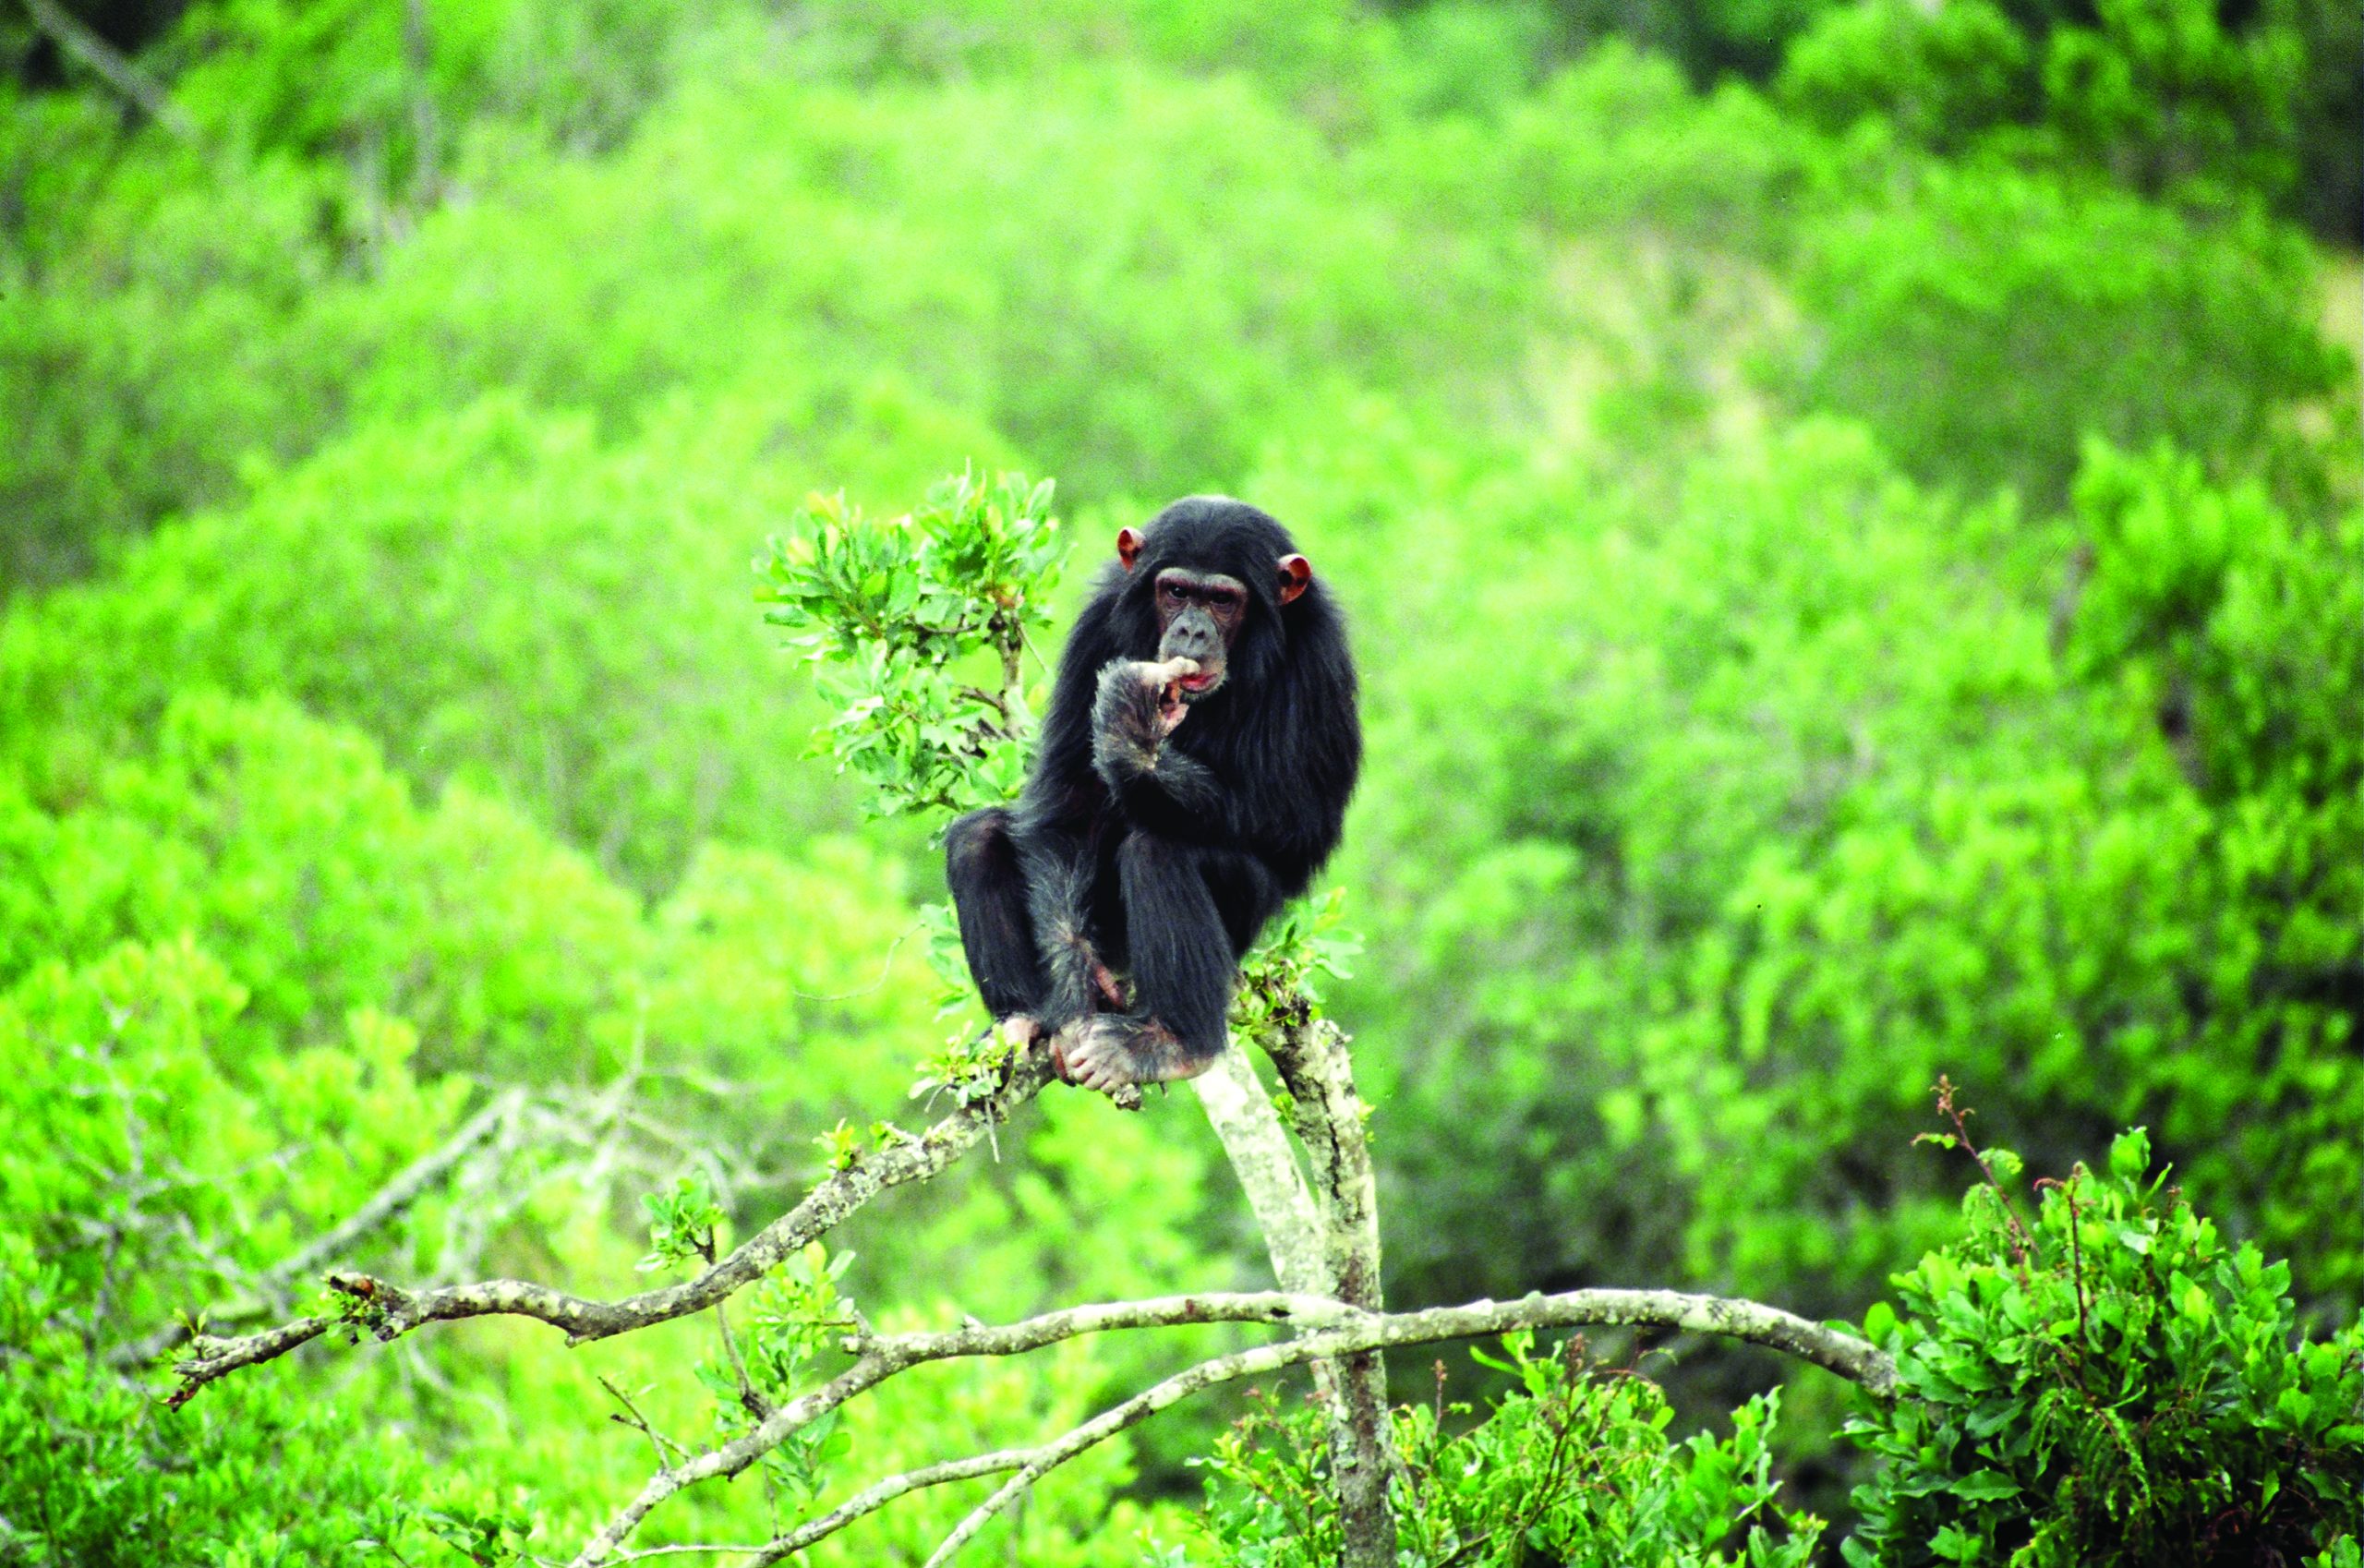 Chimpanzee in a tree